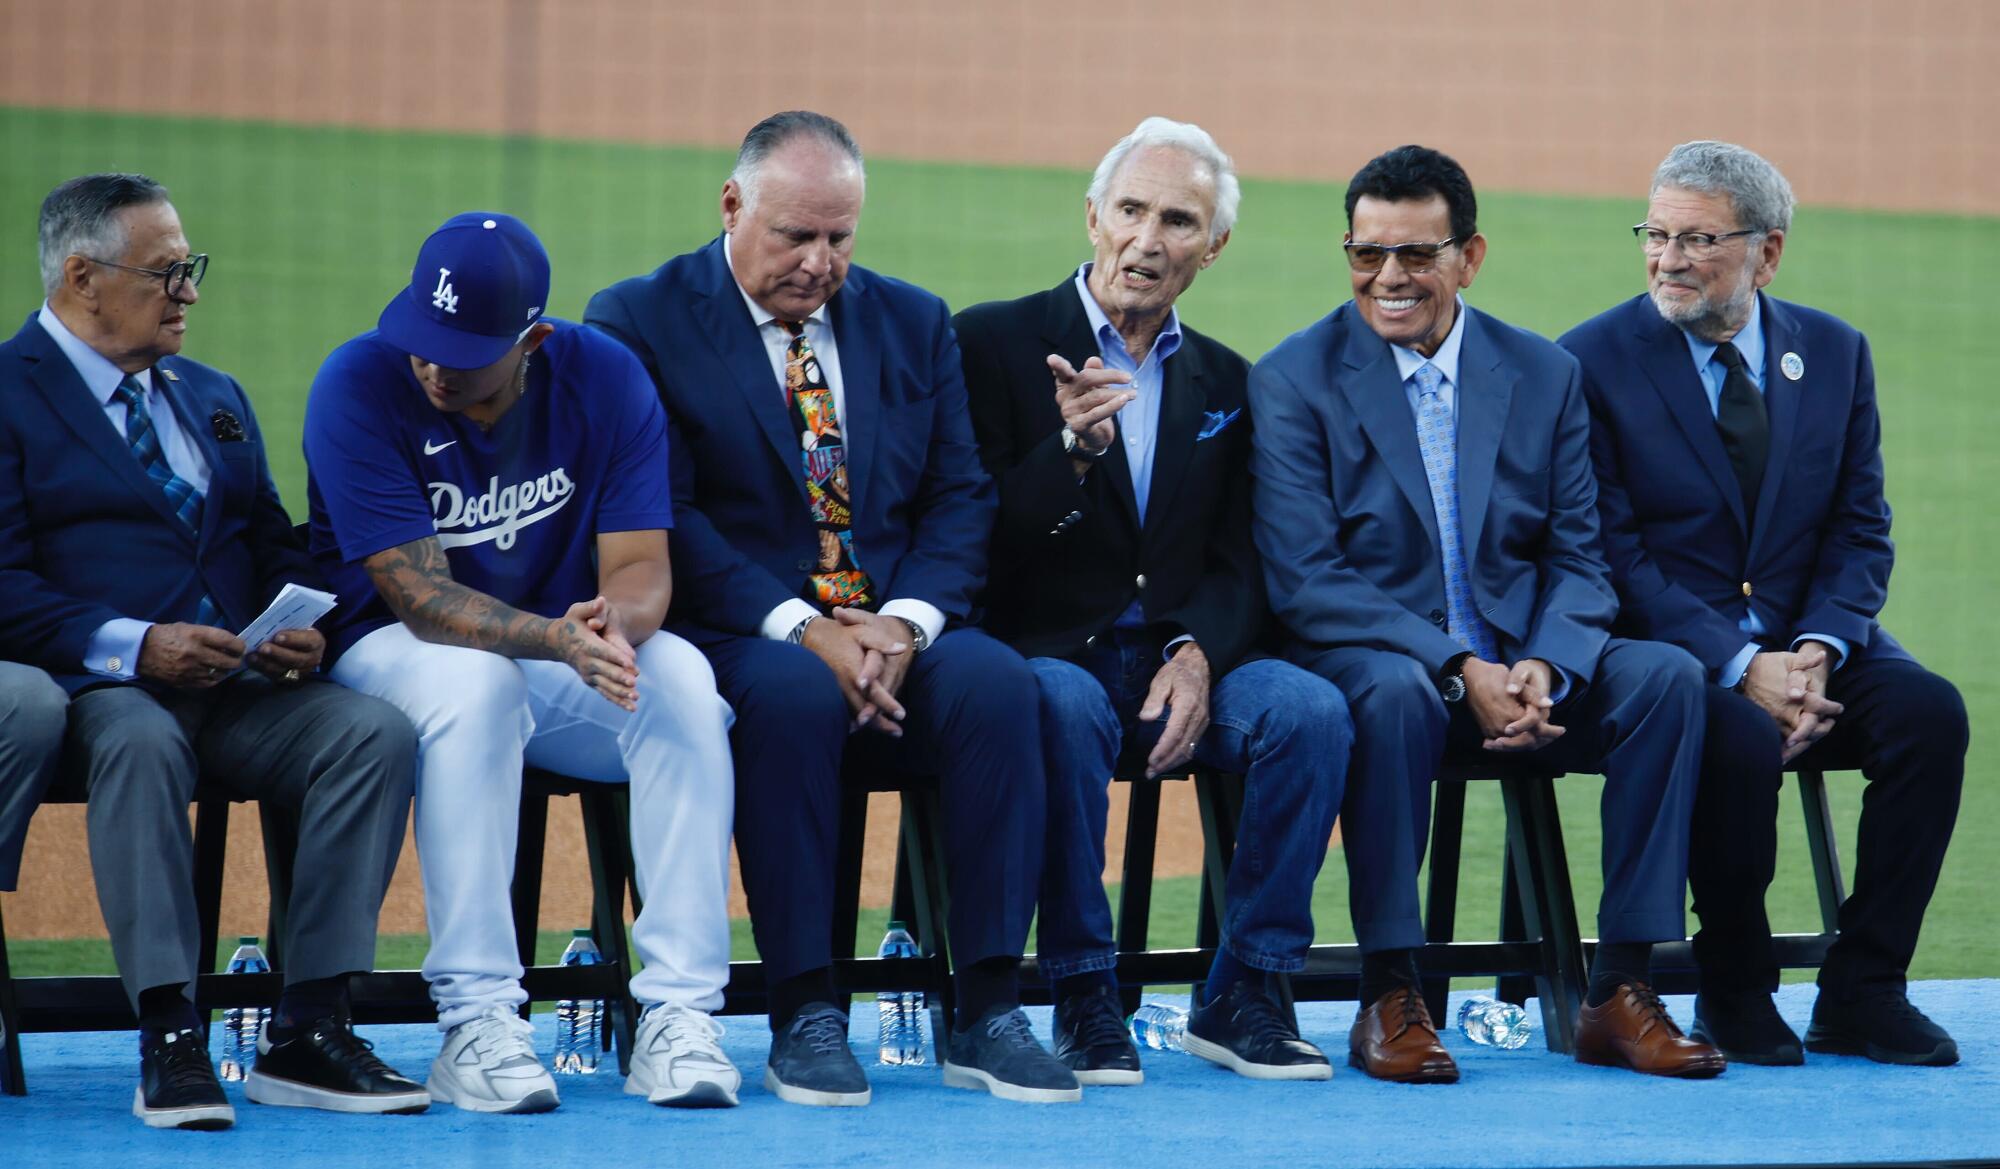 Fernandomania Returns! Dodgers To Retire Legendary Pitcher's No